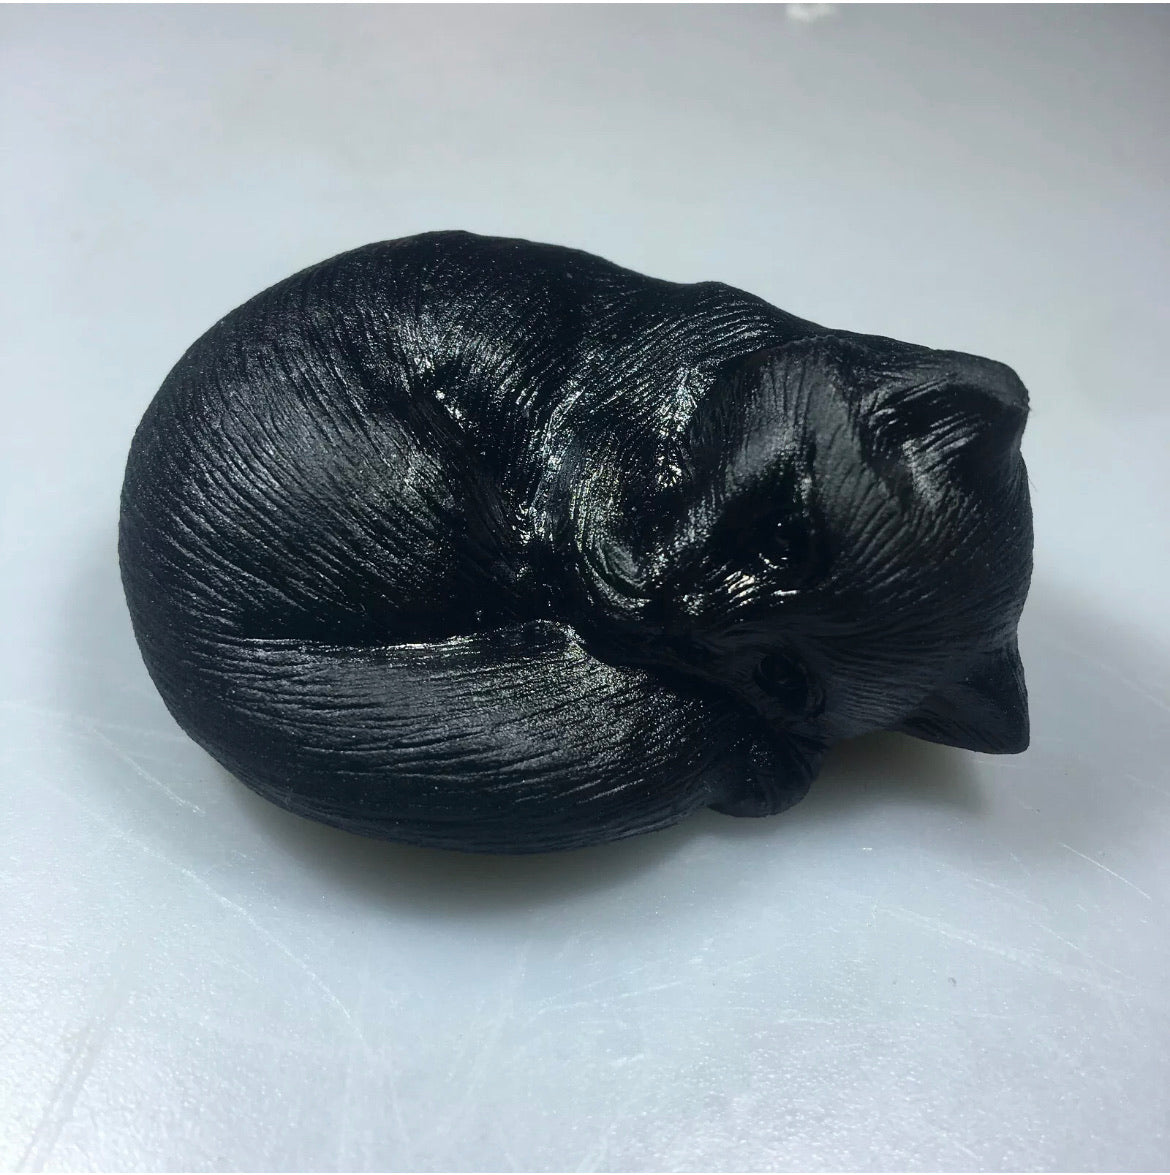 Black obsidian gemstone carved sleeping kitty cat